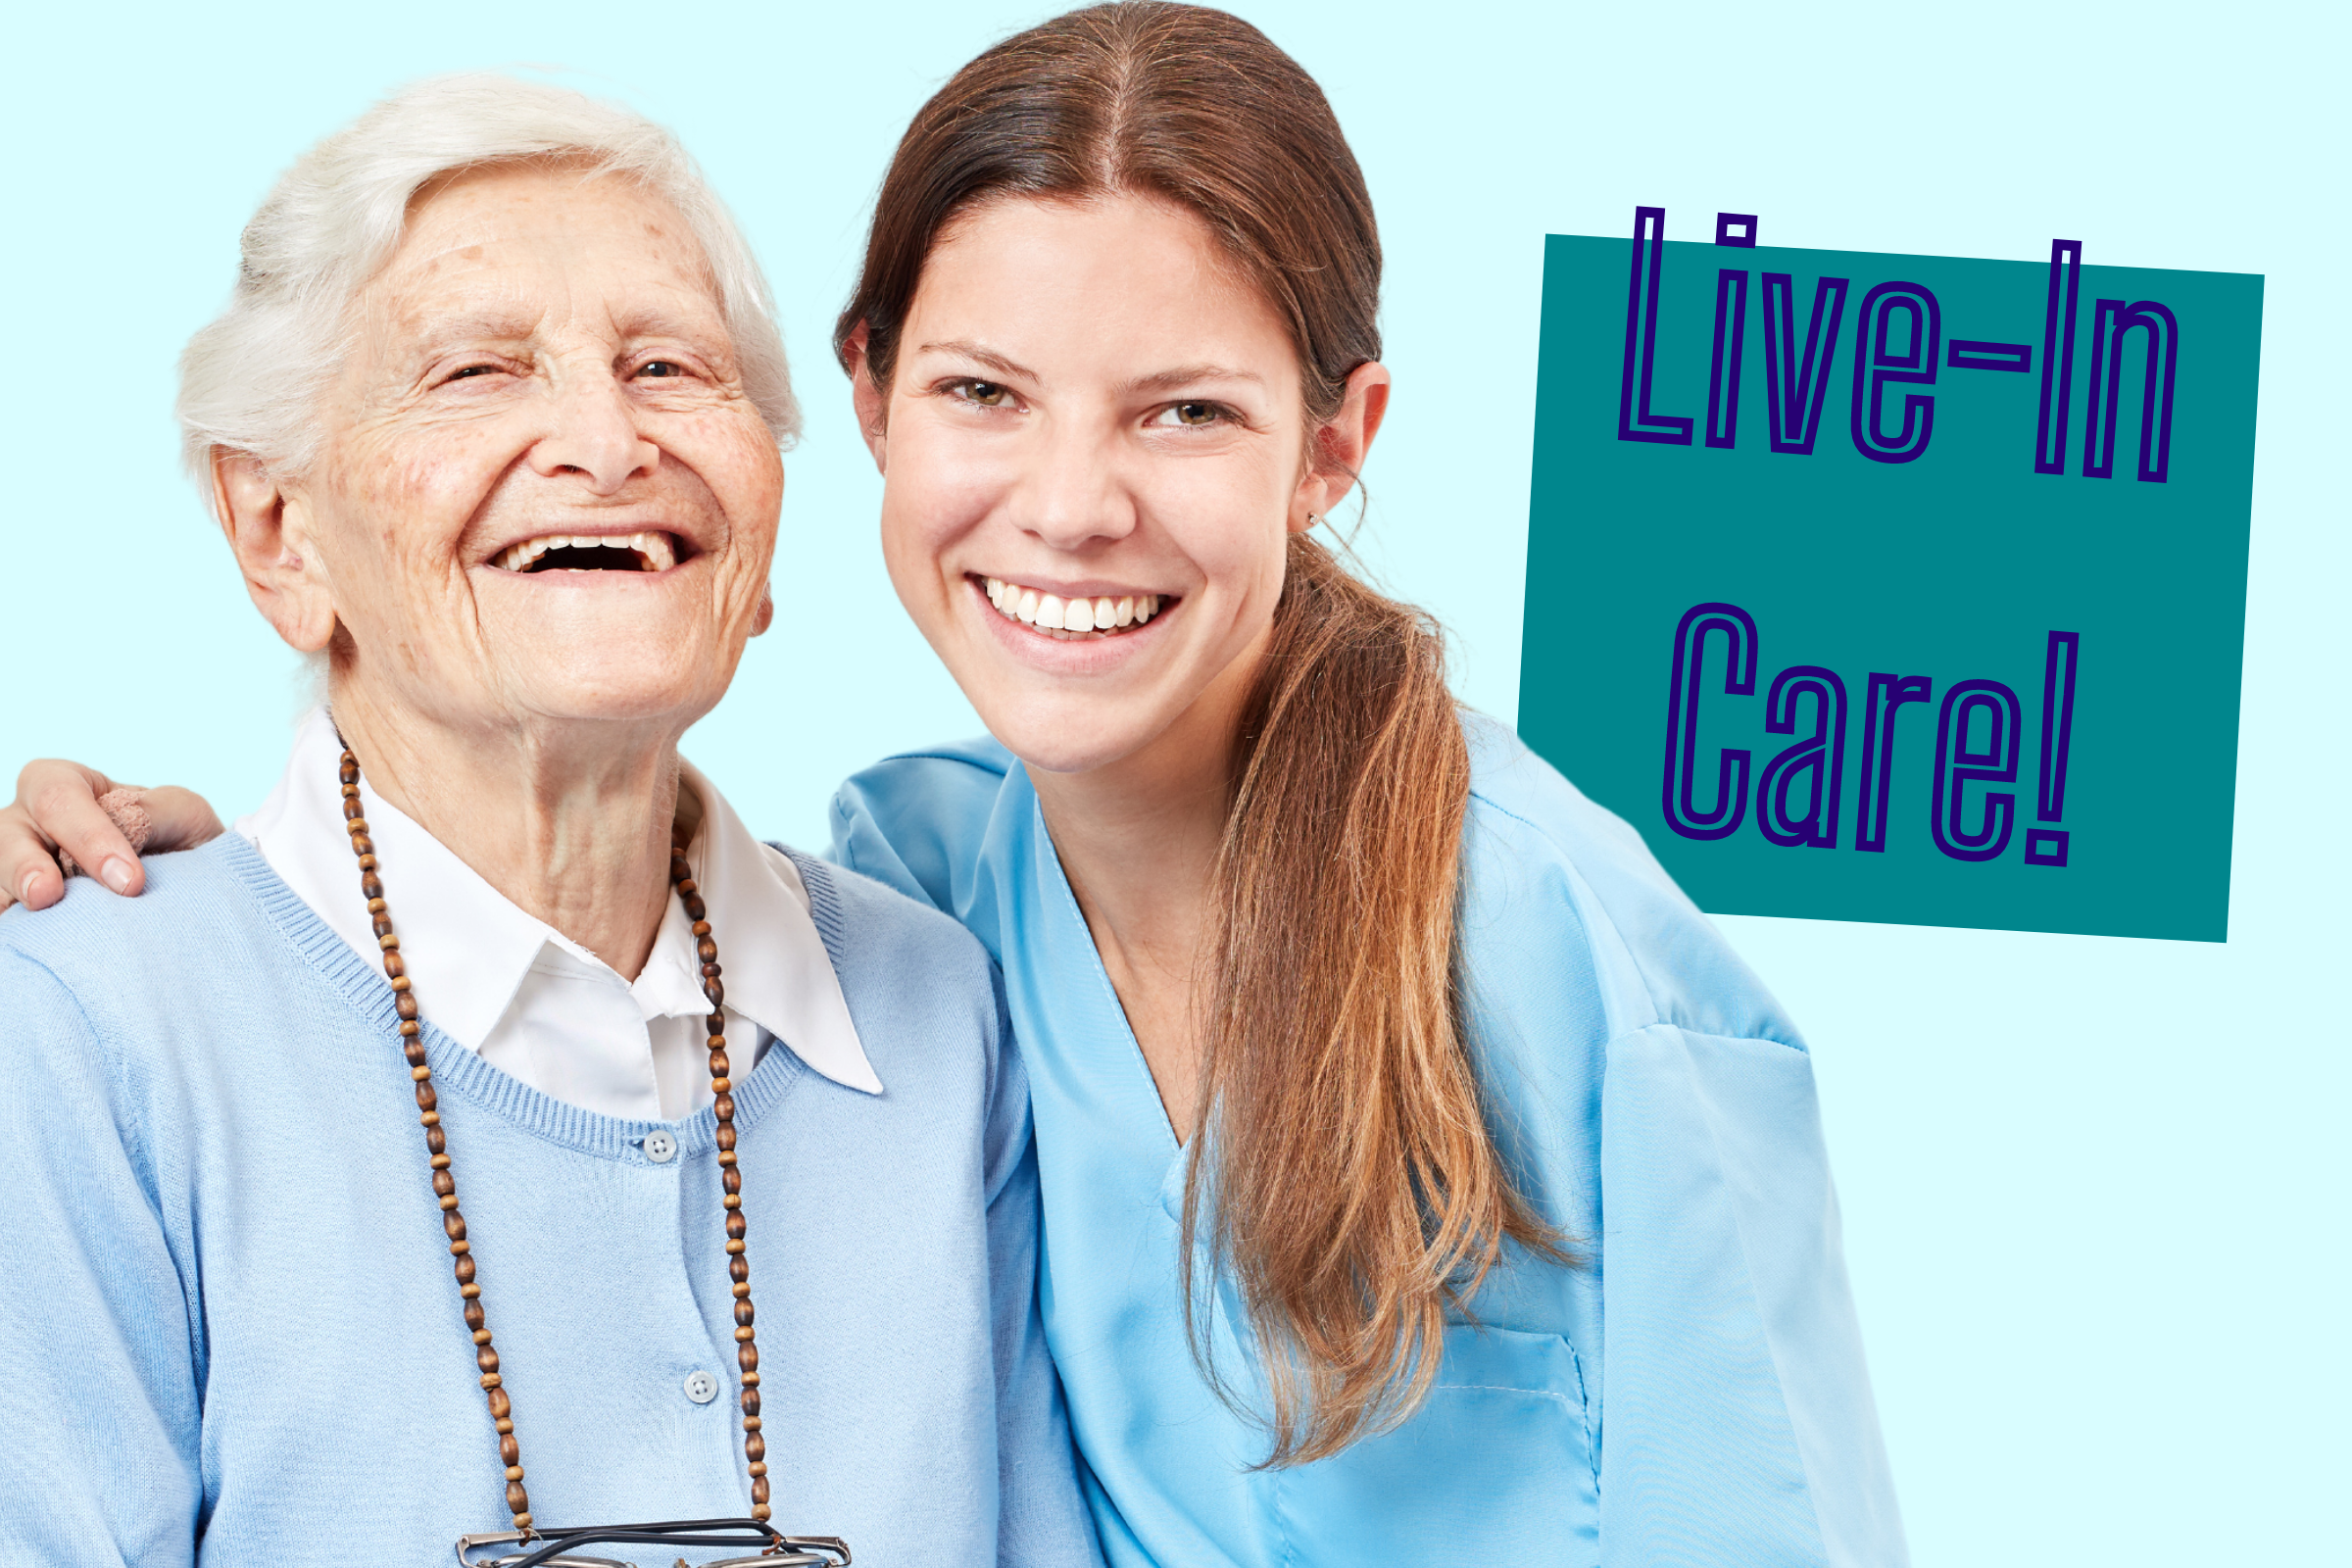 Live In Care in Norwich - Find a Live In Carer Near You